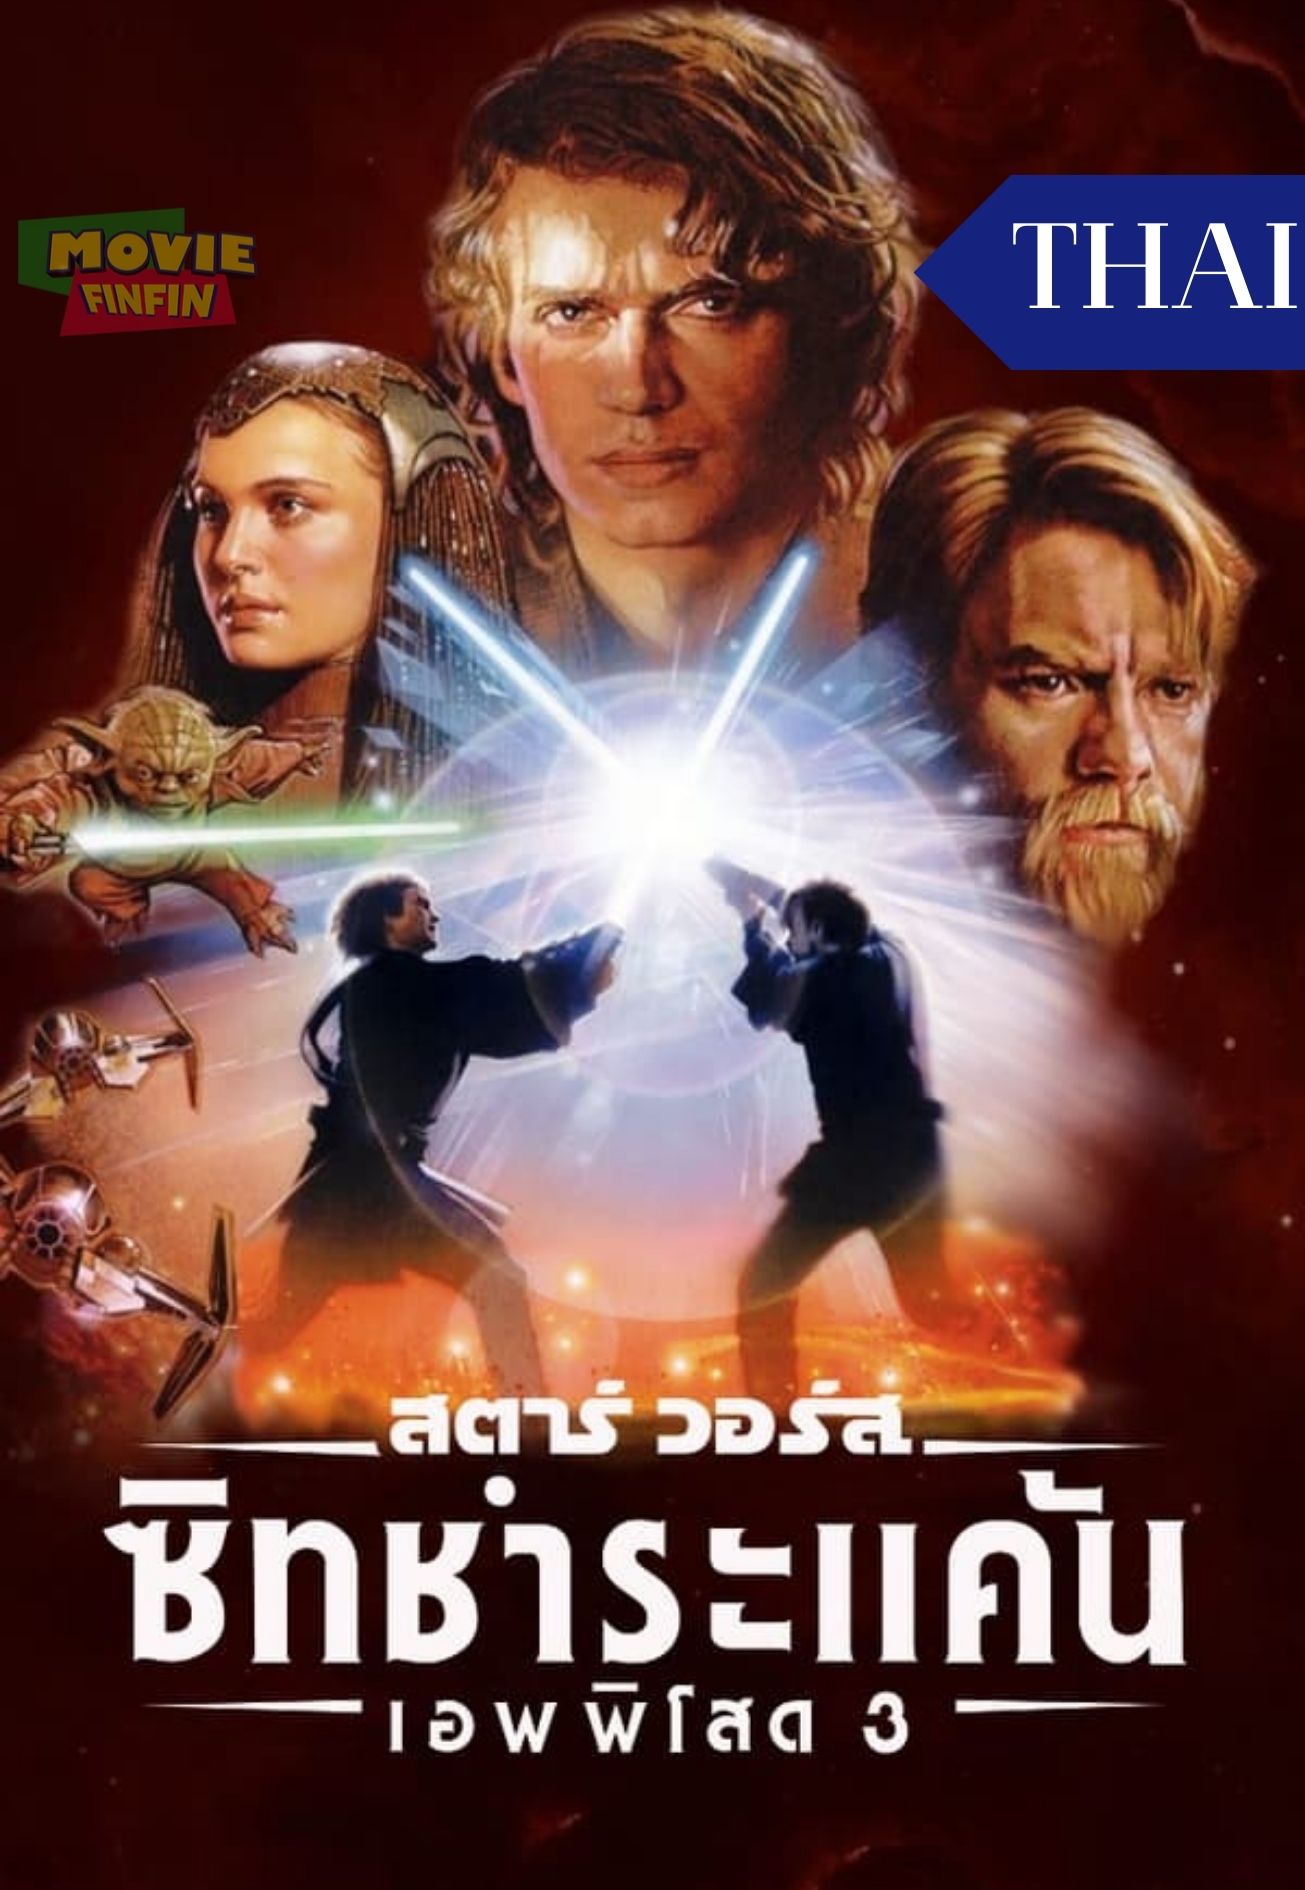 Star Wars Episode 3 Revenge of the Sith (2005) สตาร์ วอร์ส ภาค 3 ซิธชำระแค้น